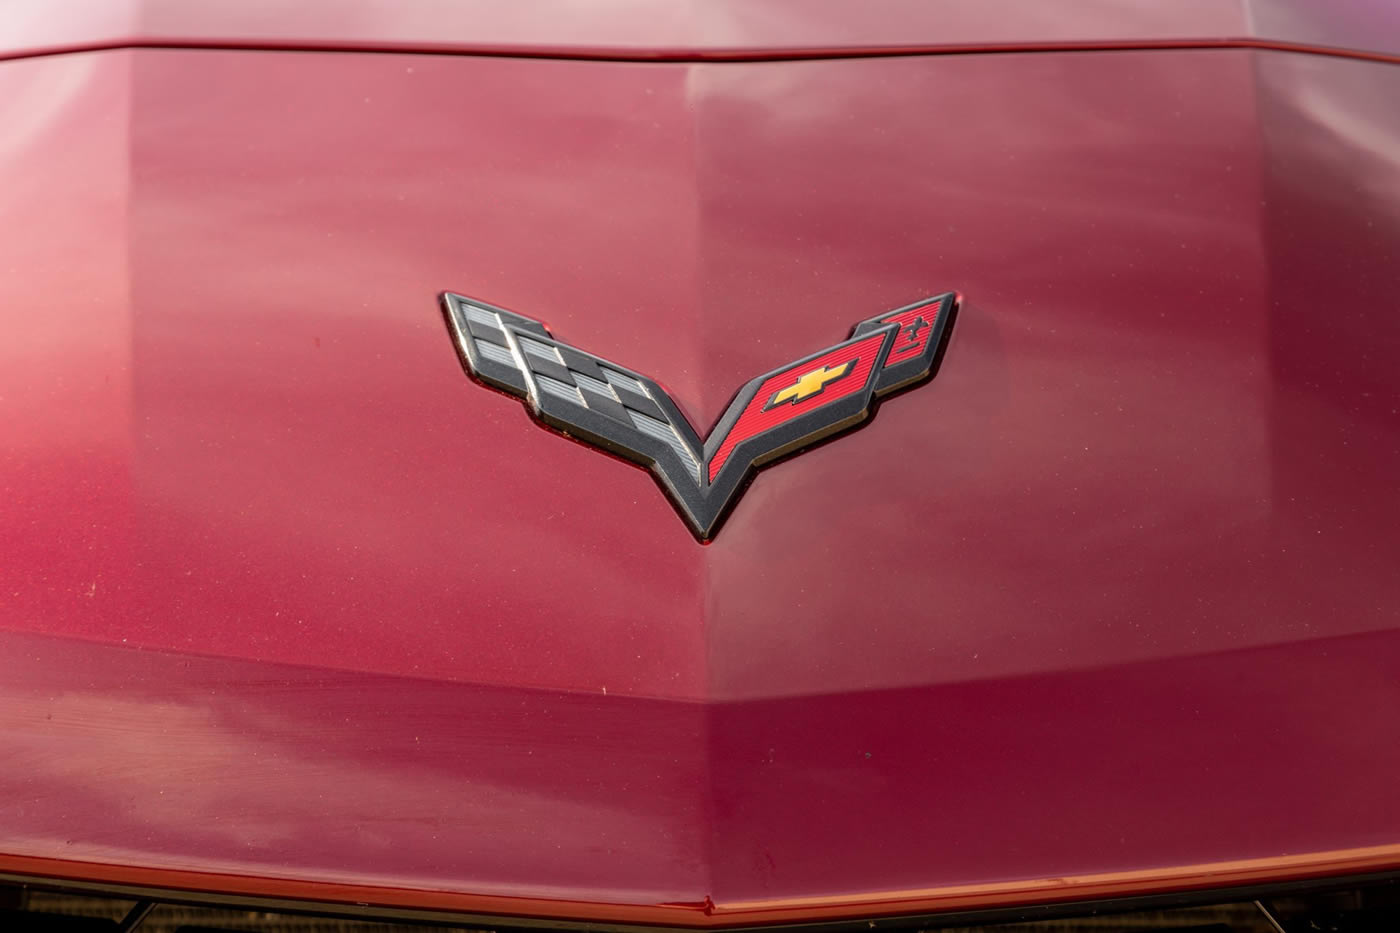 2018 Corvette Z06 Coupe in Long Beach Red Metallic